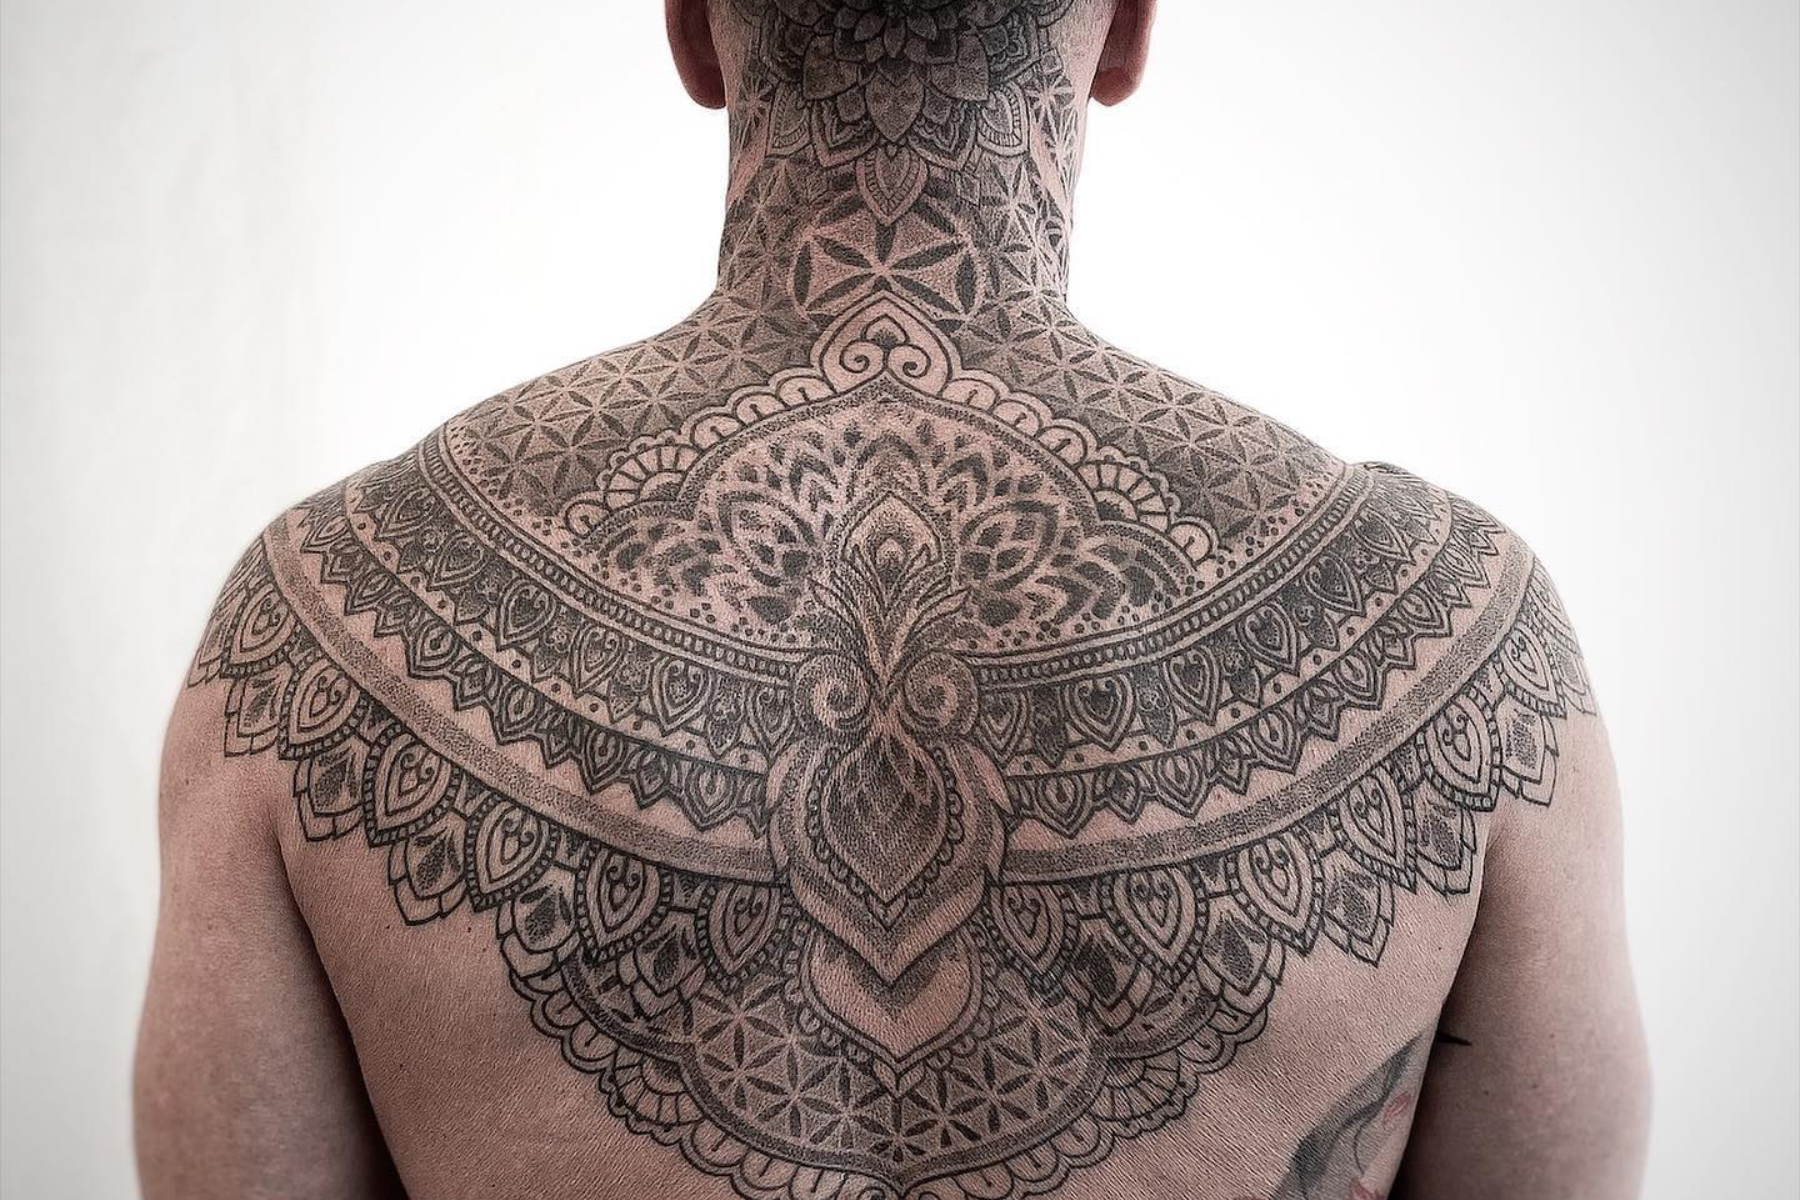 A man has a mandala tattoo across his shoulders and back